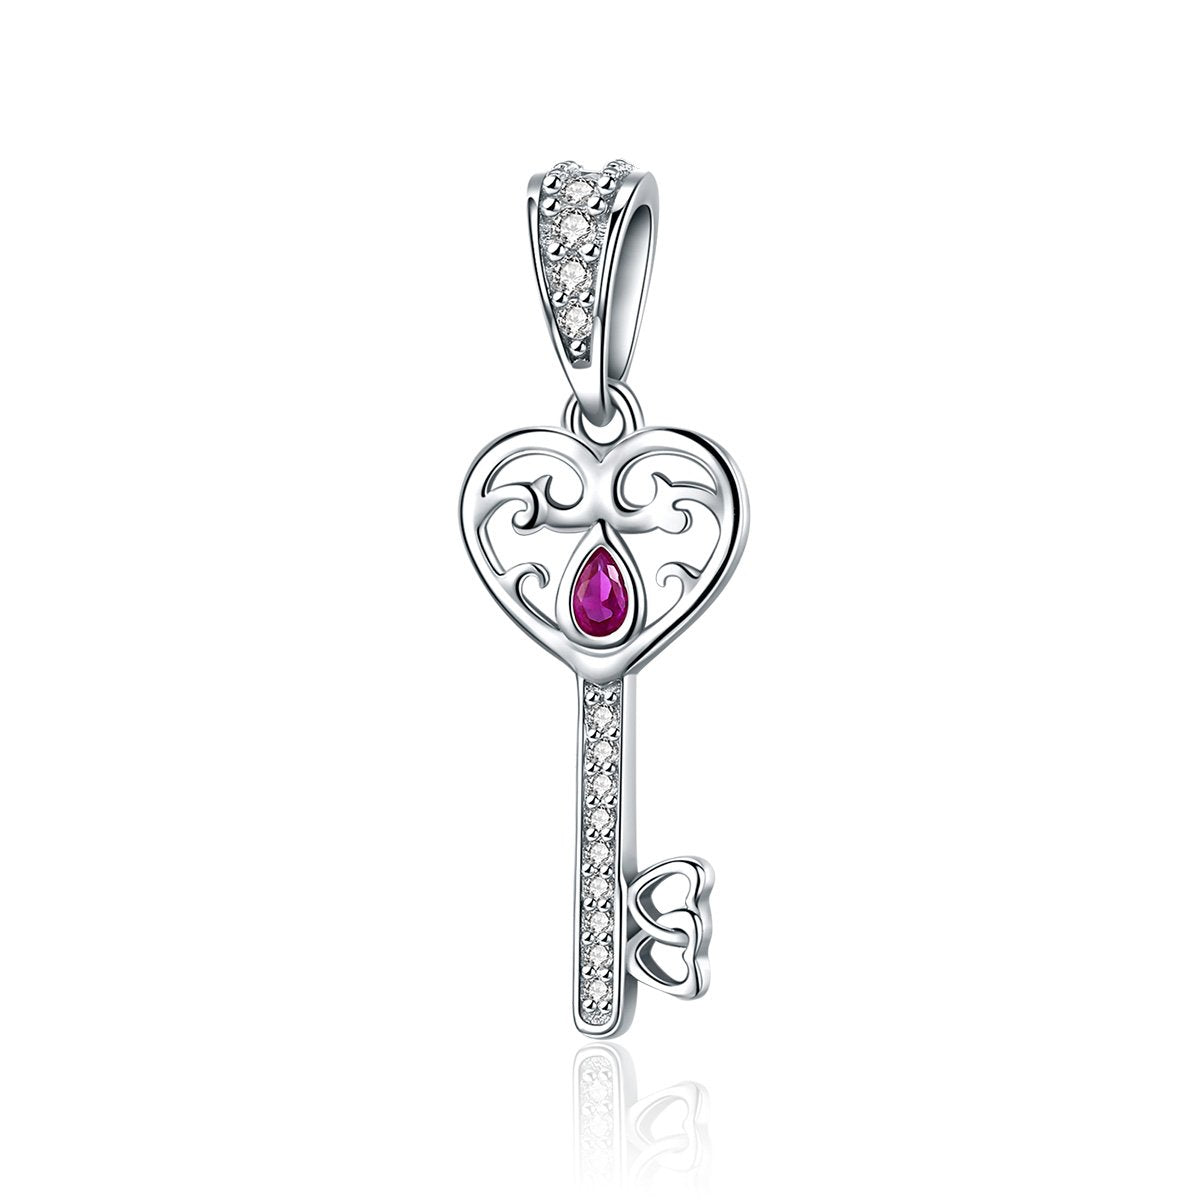 Sterling 925 silver charm the heart key pendant fits Pandora charm and European charm bracelet Xaxe.com